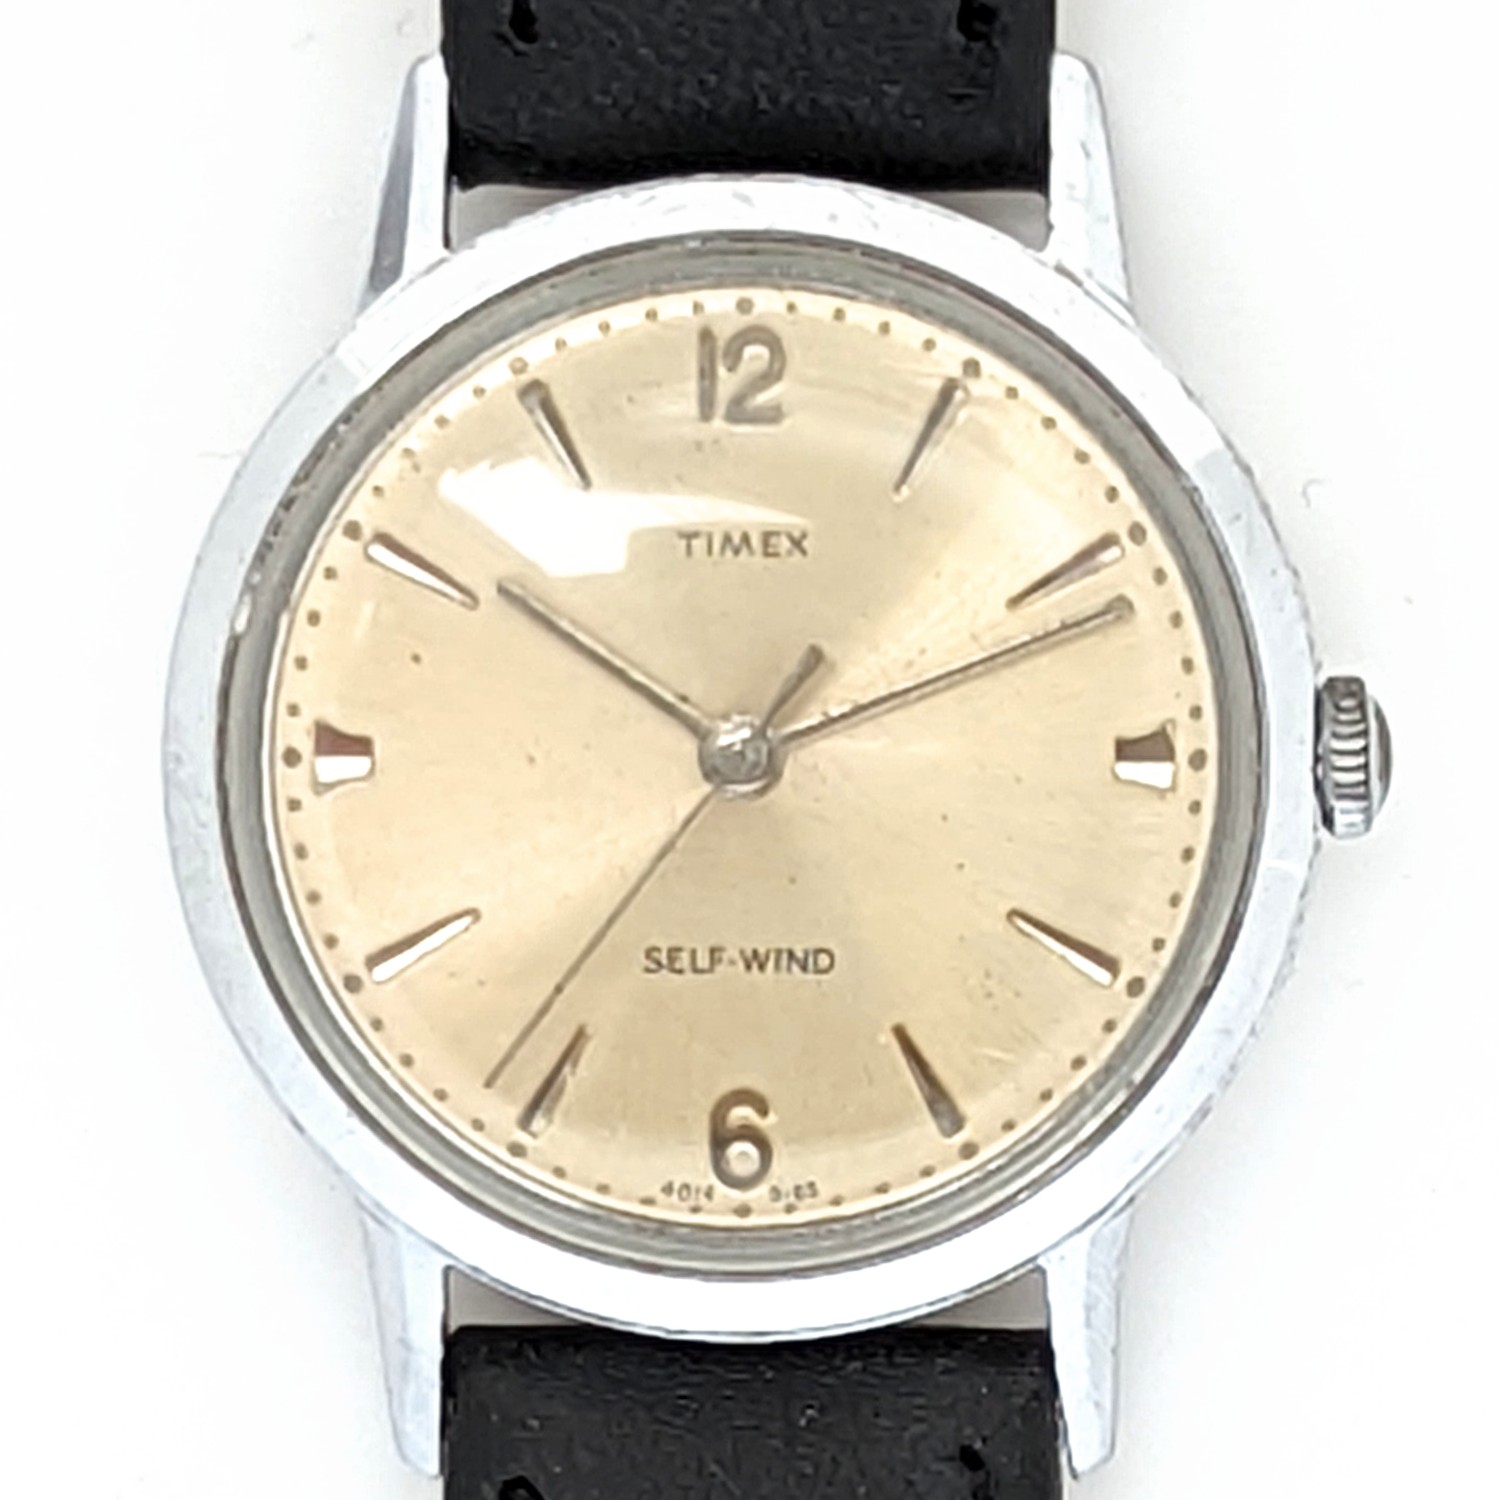 Timex Viscount 4014 3165 [1965]